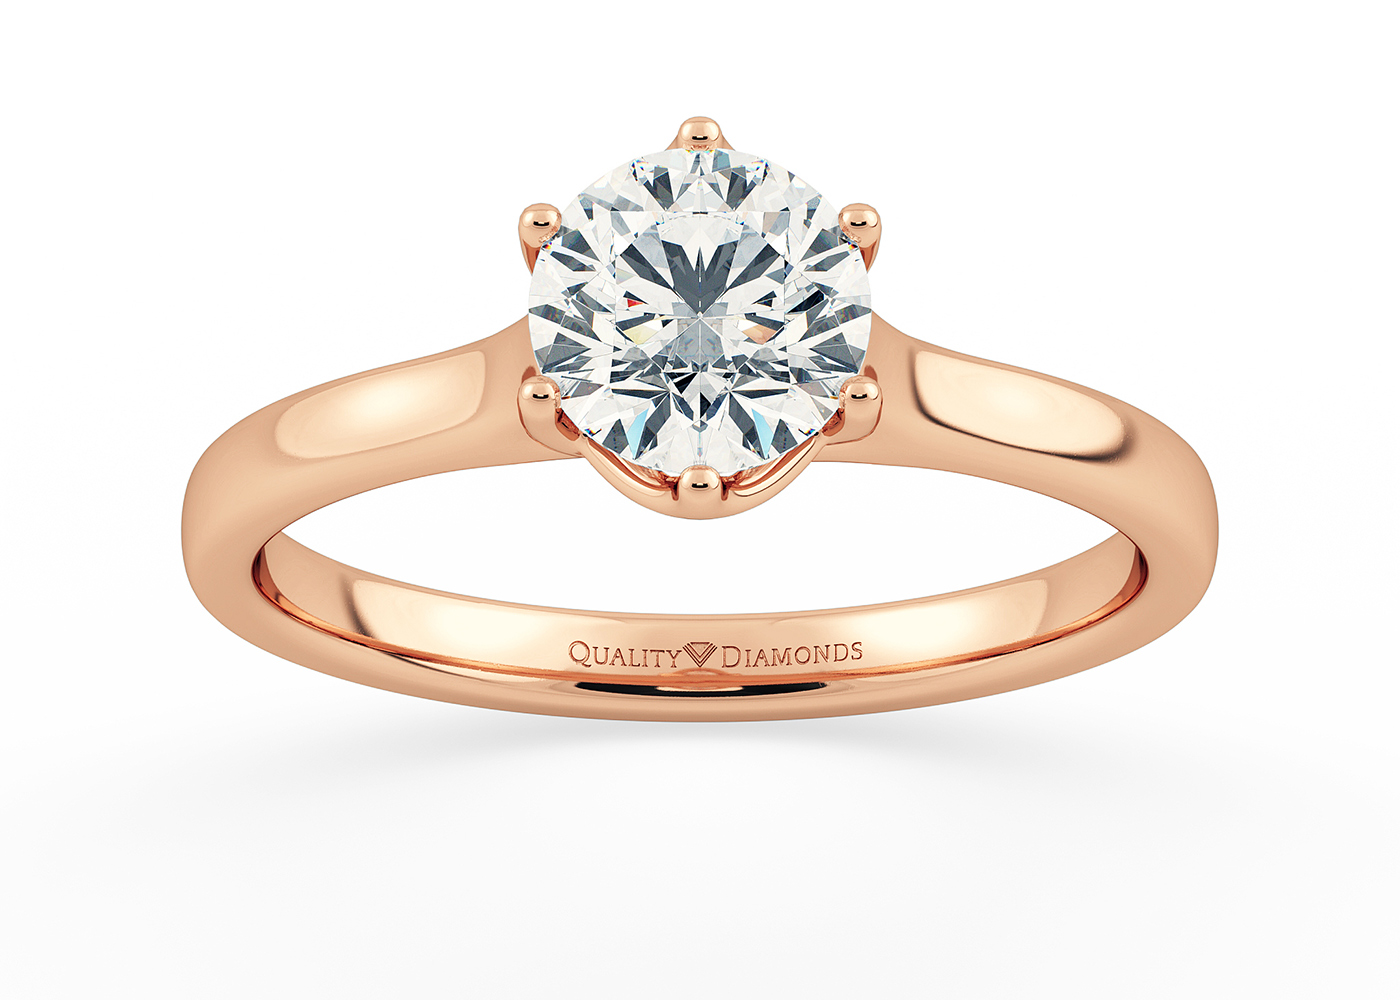 Six Claw Round Brilliant Promessa Diamond Ring in 18K Rose Gold